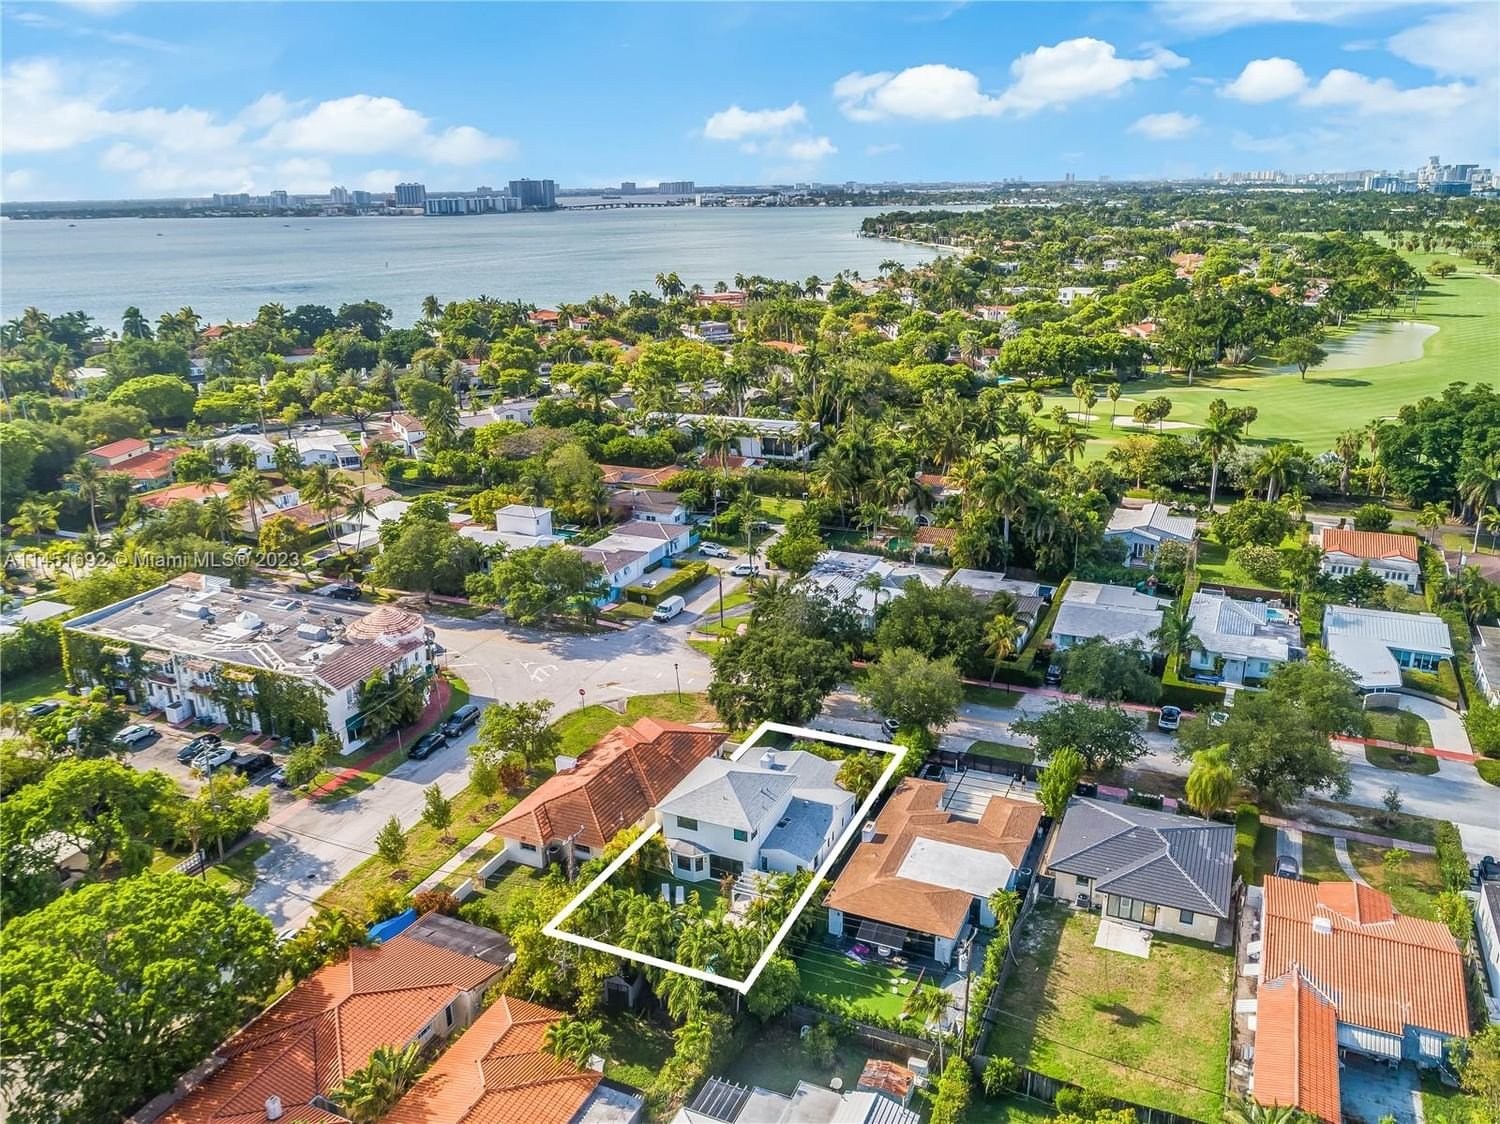 Real estate property located at 646 51 Street, Miami-Dade County, Miami Beach, FL